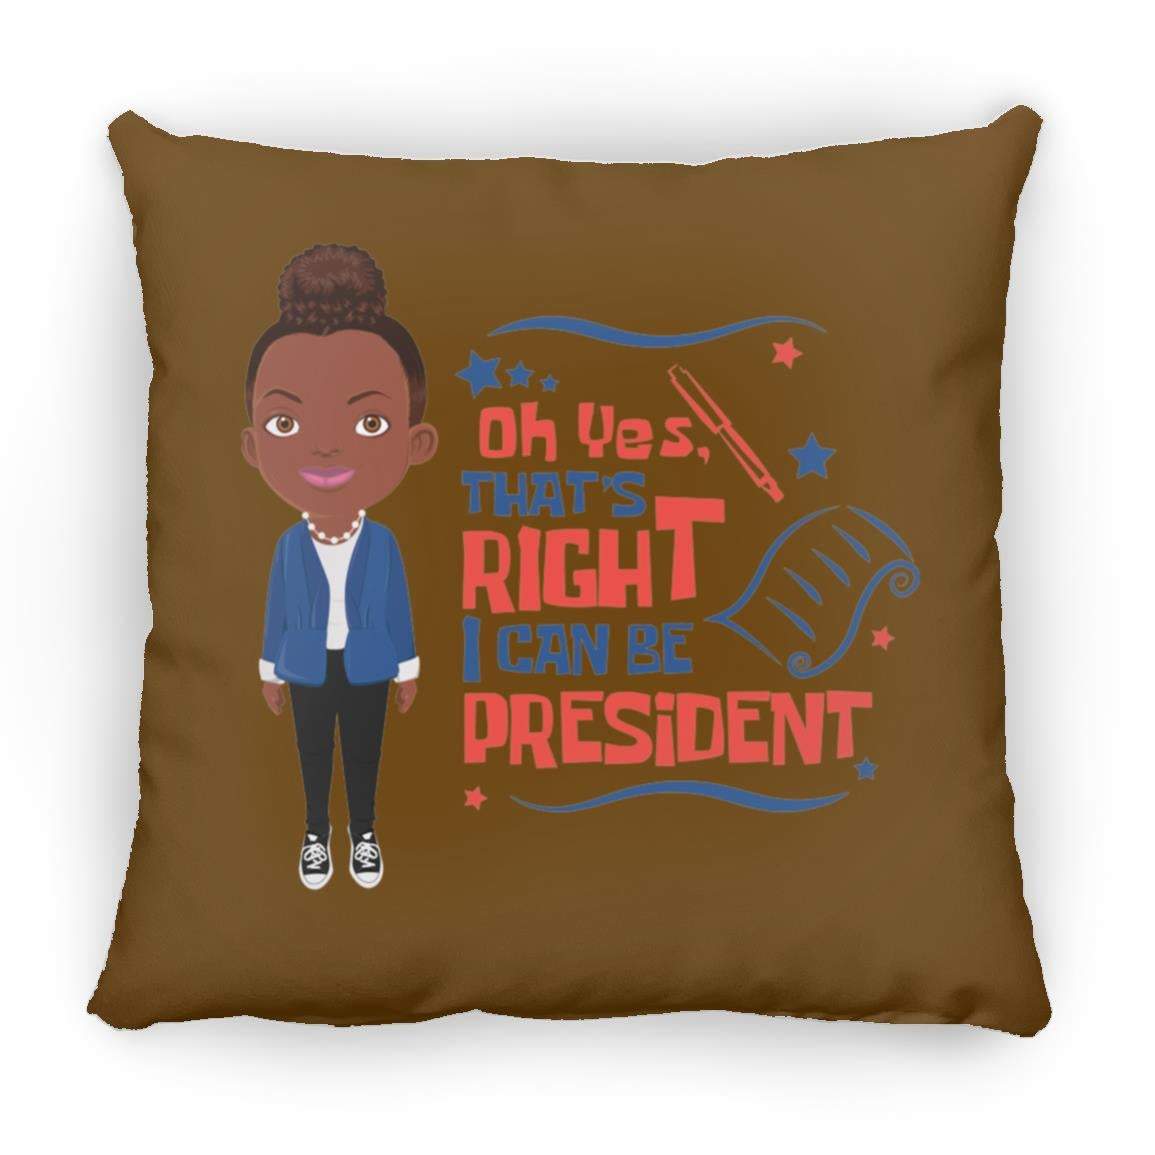 President Square Pillow 16x16-CustomCat-Accessories,Next President,Pillows